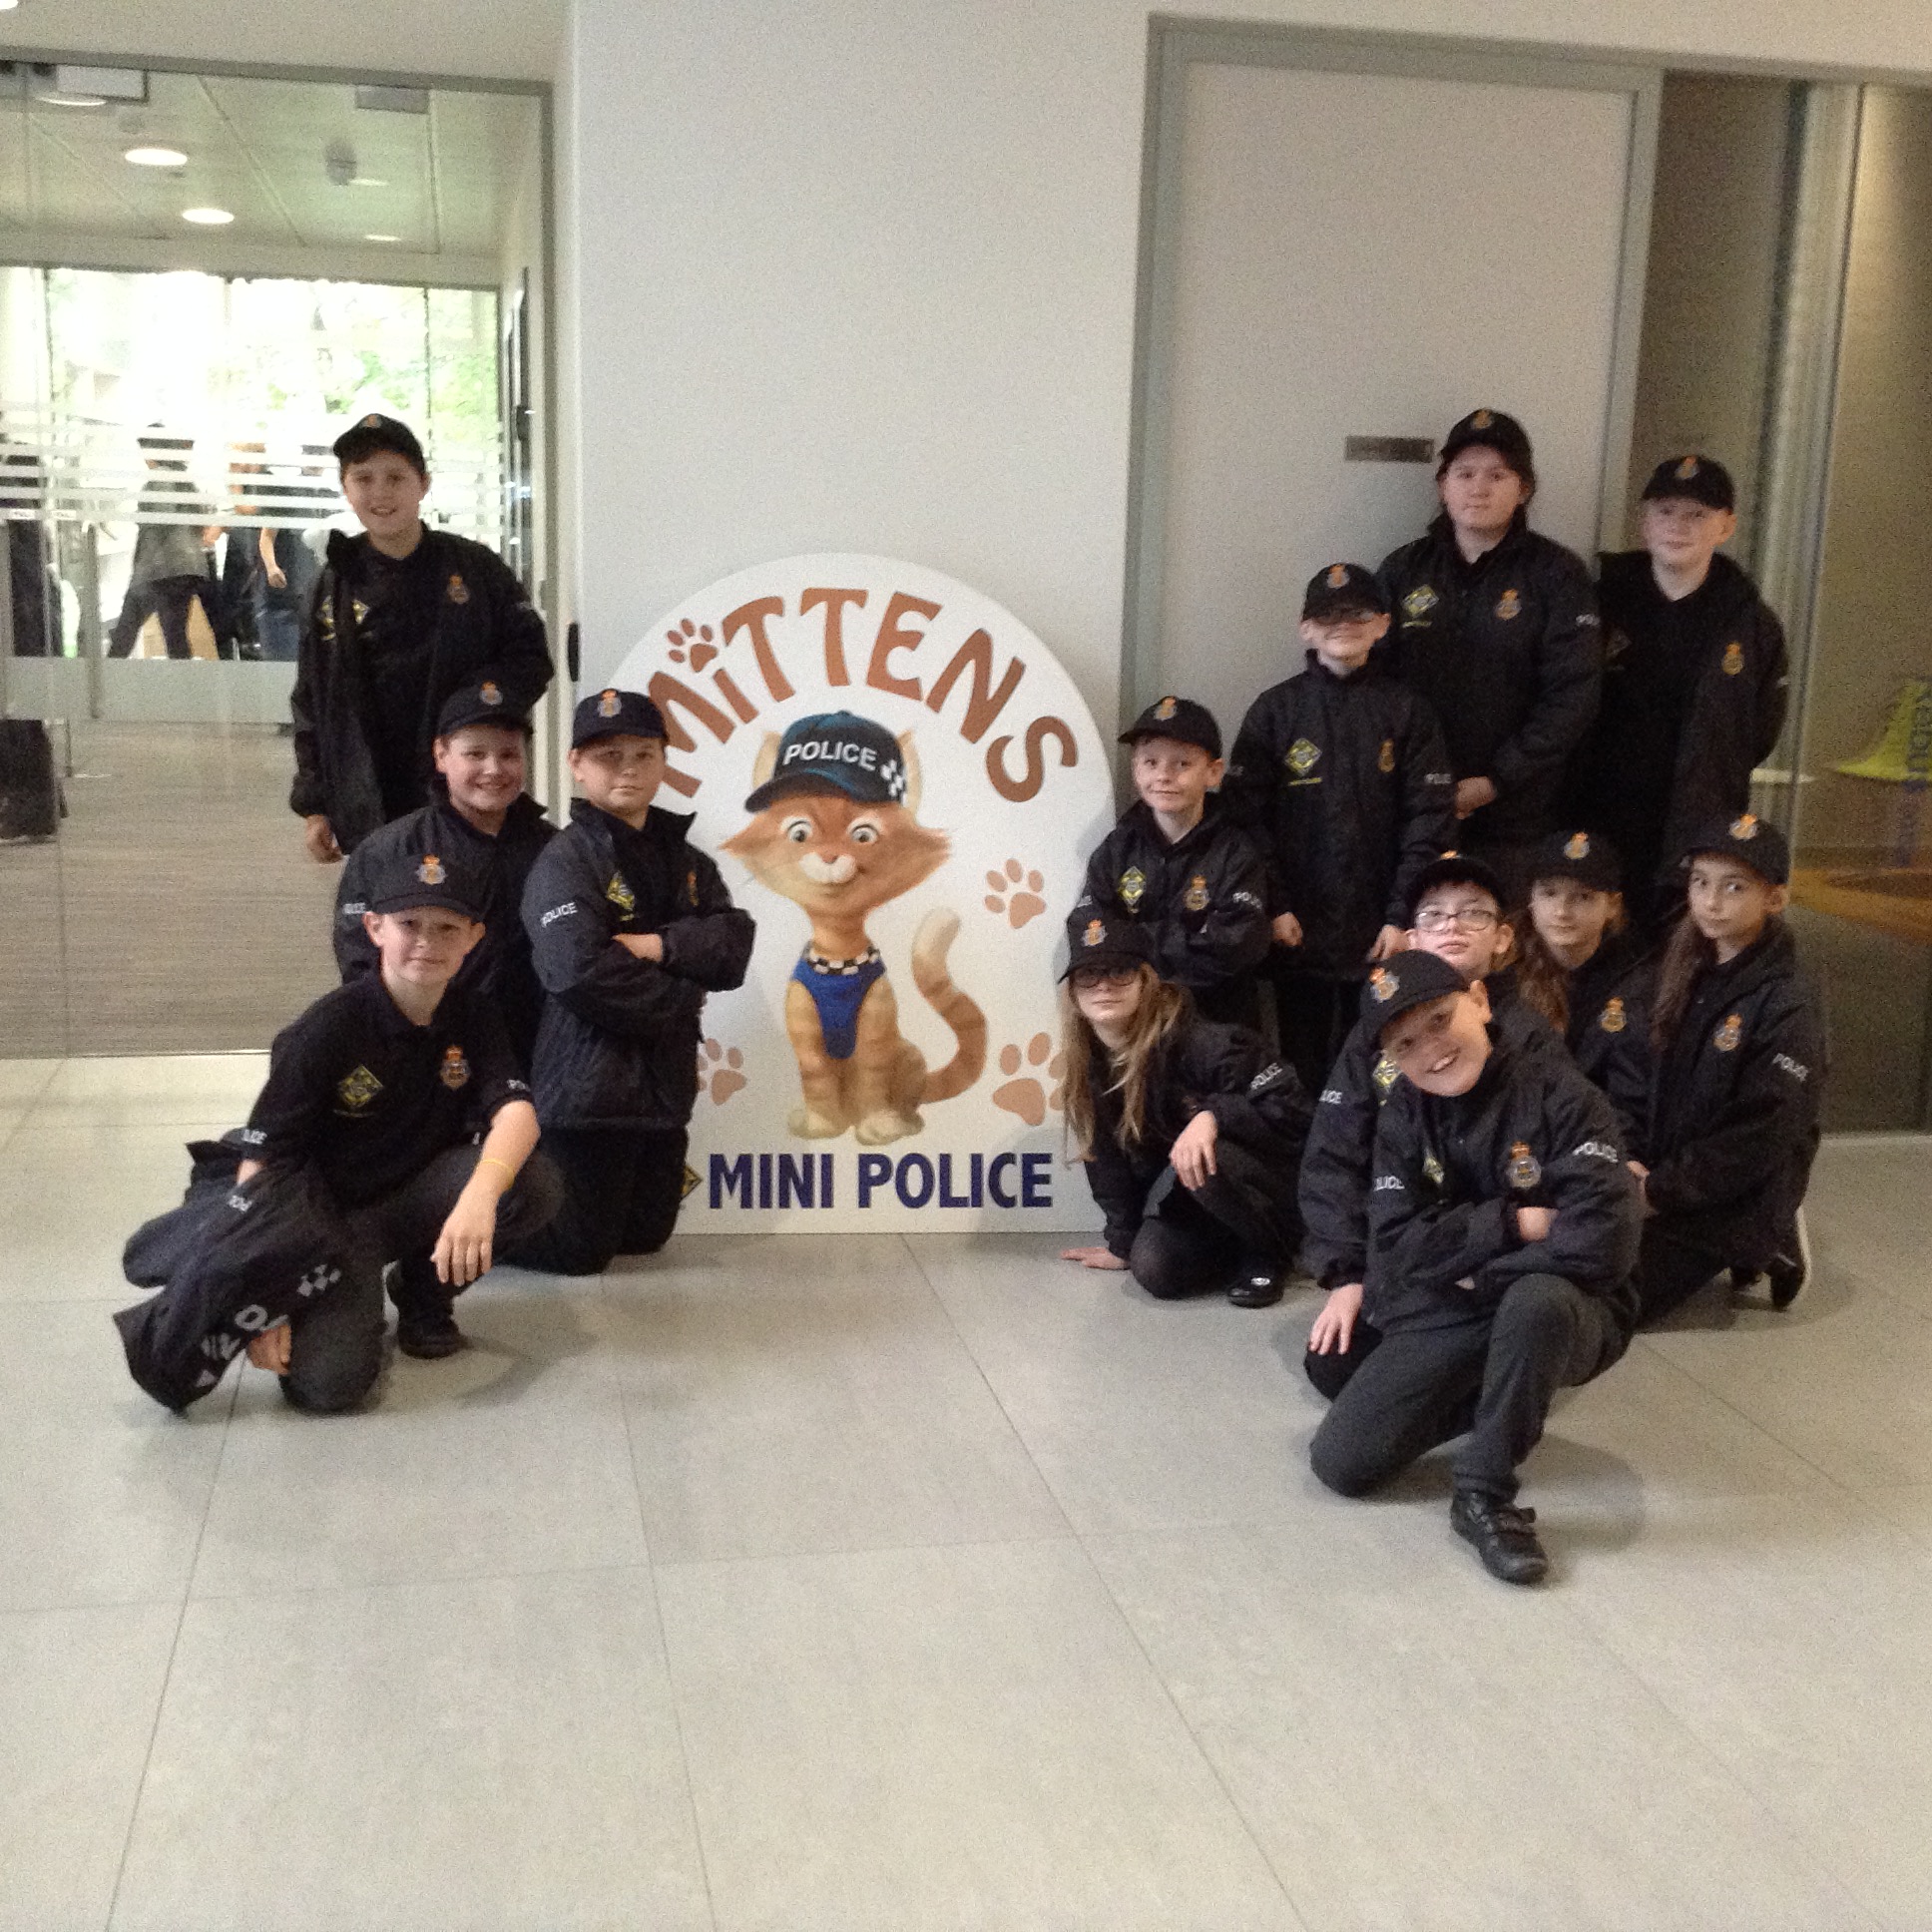 Mini Police at Aykley Heads